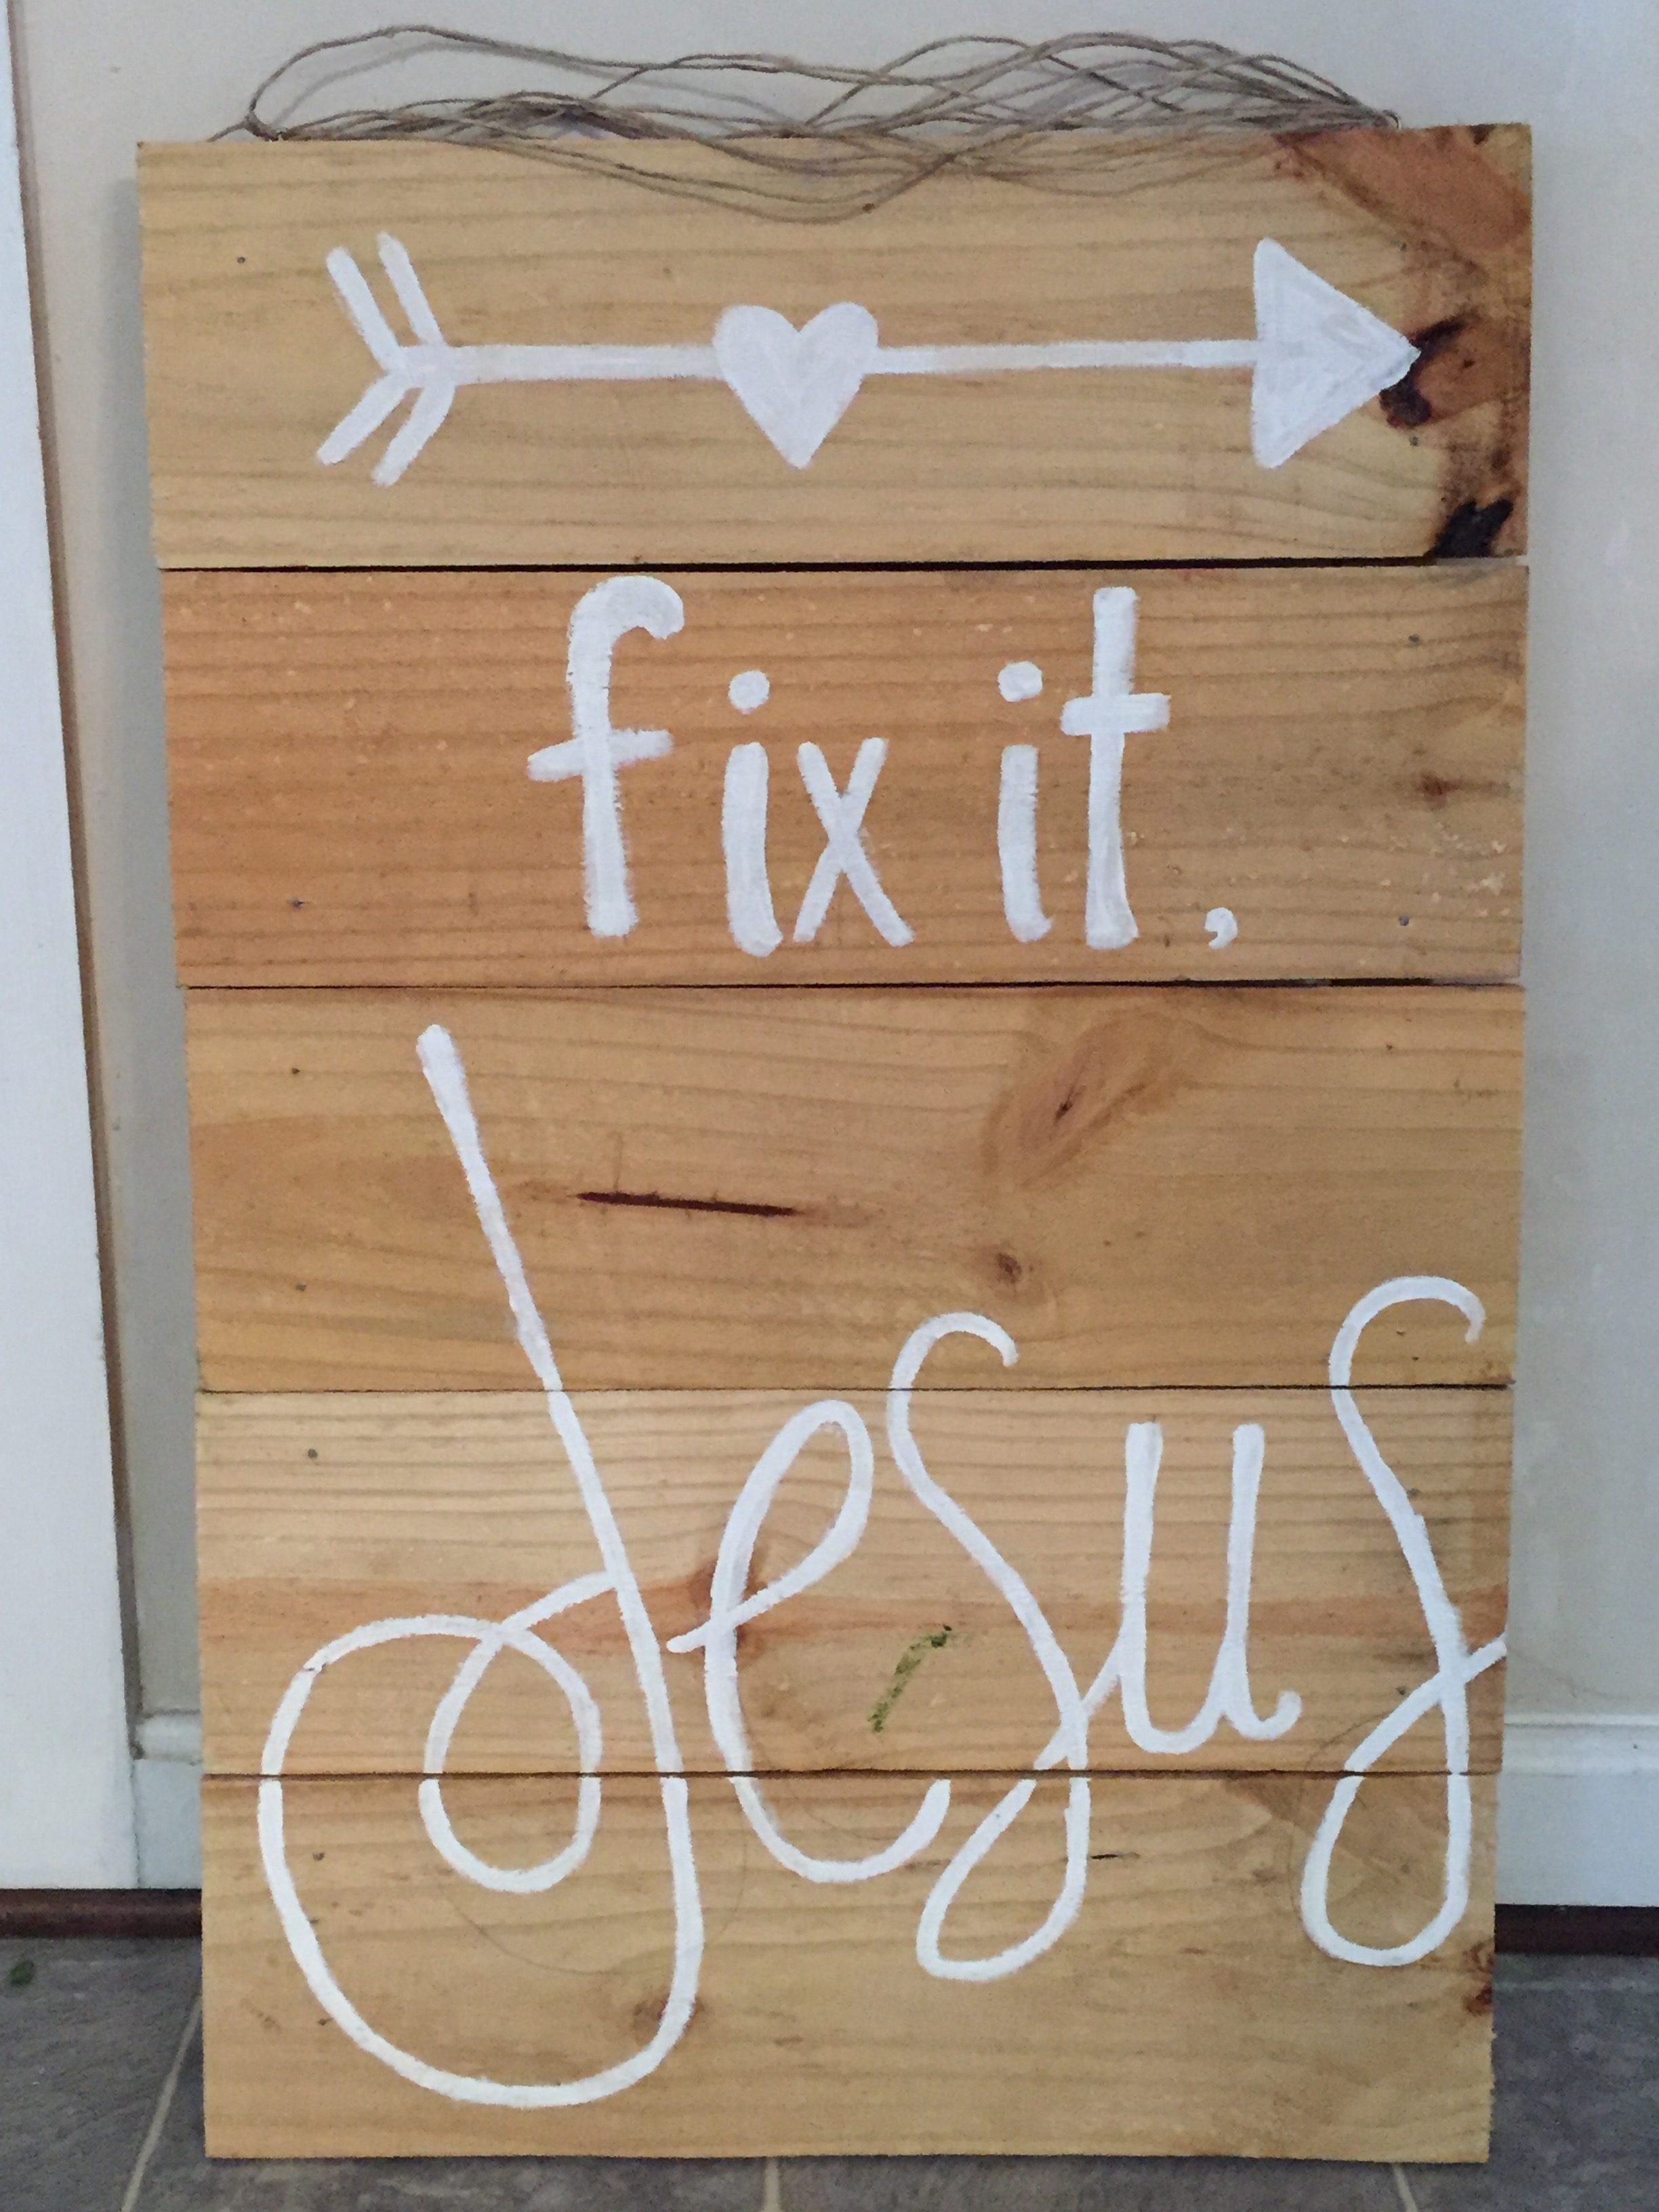 fix it jesus